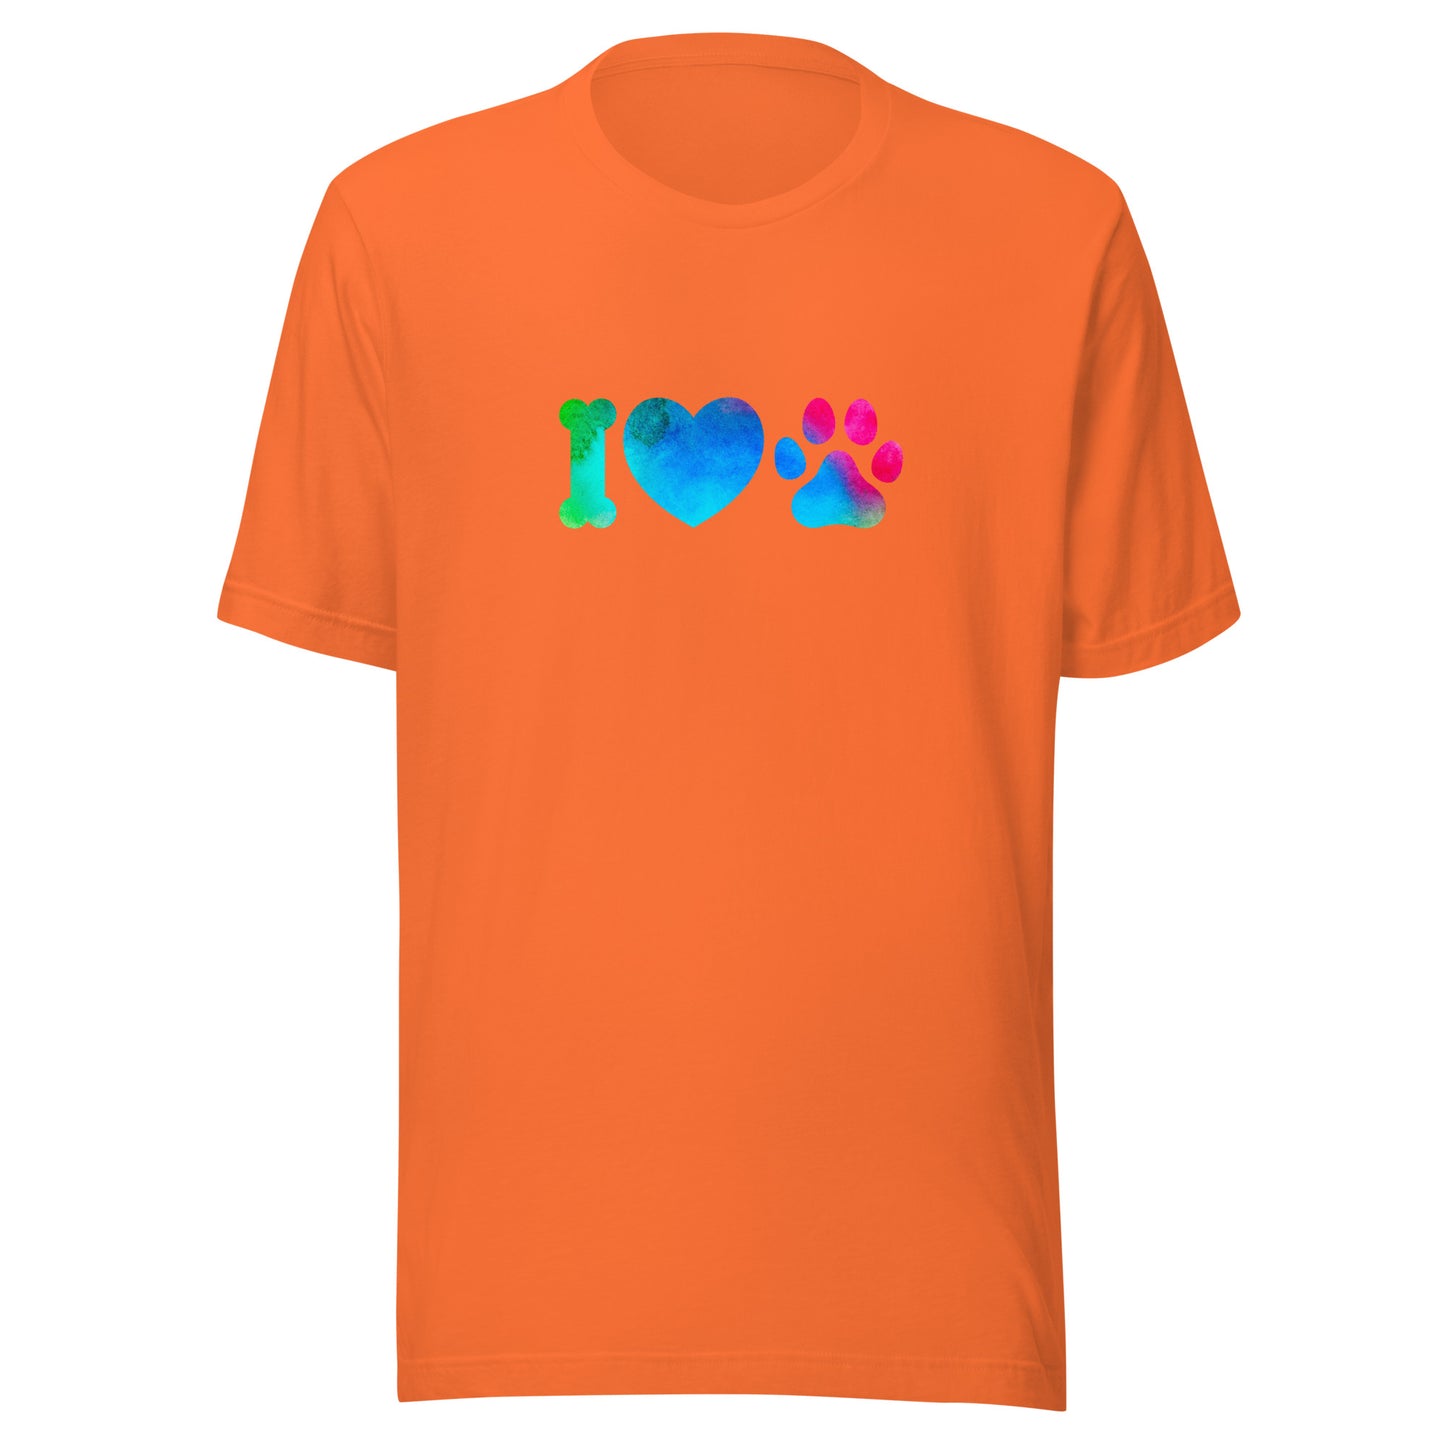 "I Love Dogs" Unisex T-Shirt